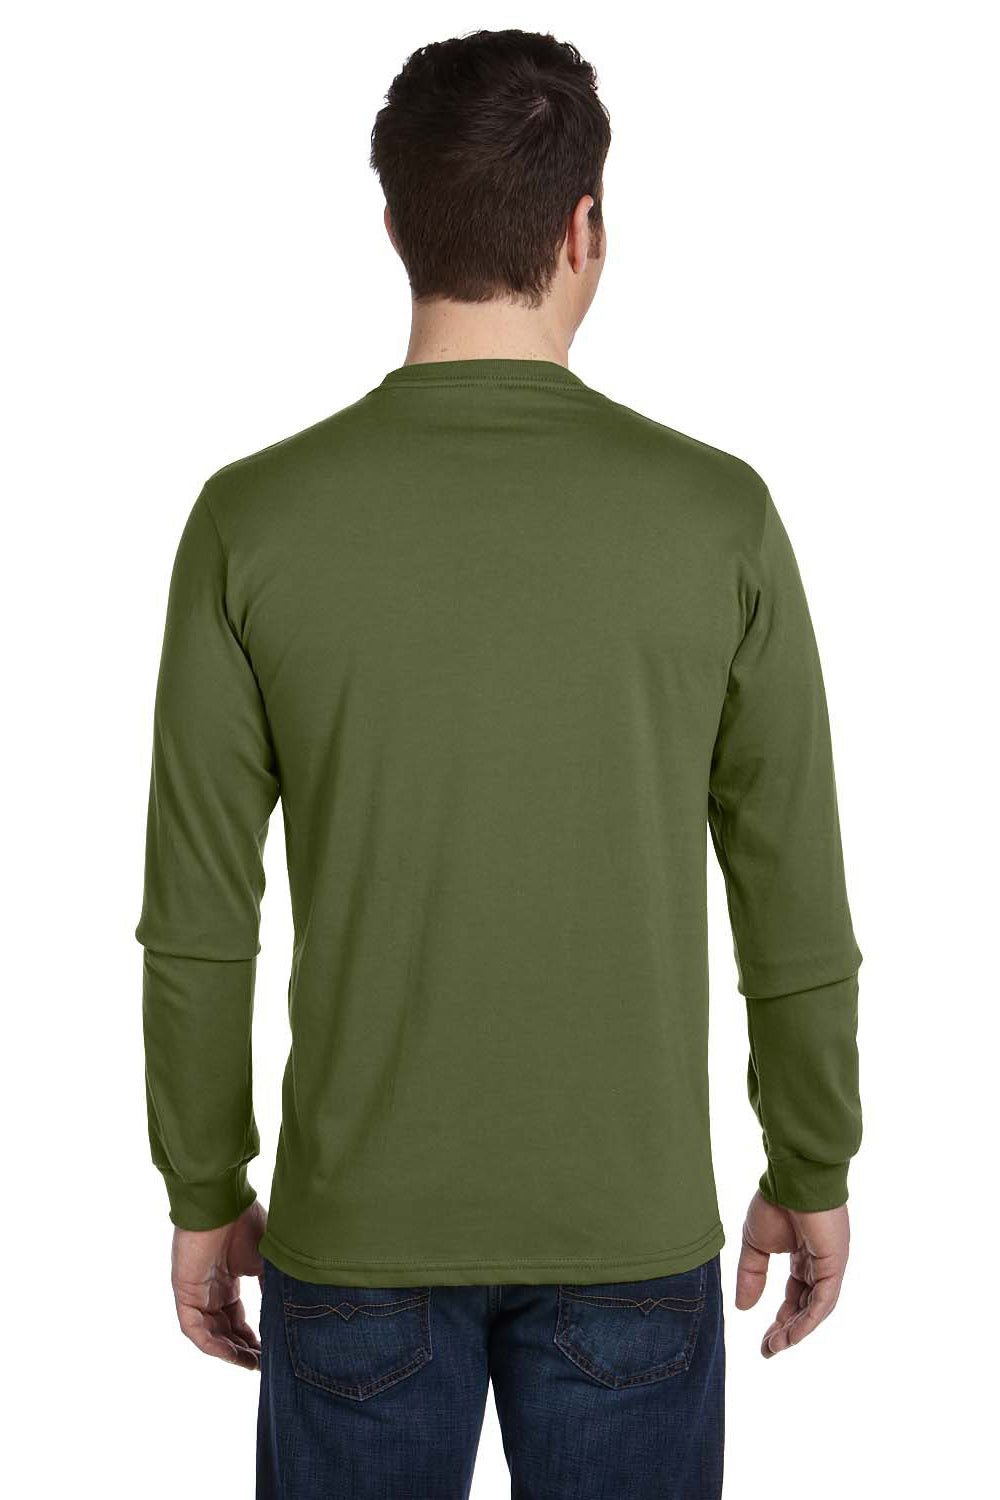 Econscious EC1500 Mens Long Sleeve Crewneck T-Shirt Olive Green Back